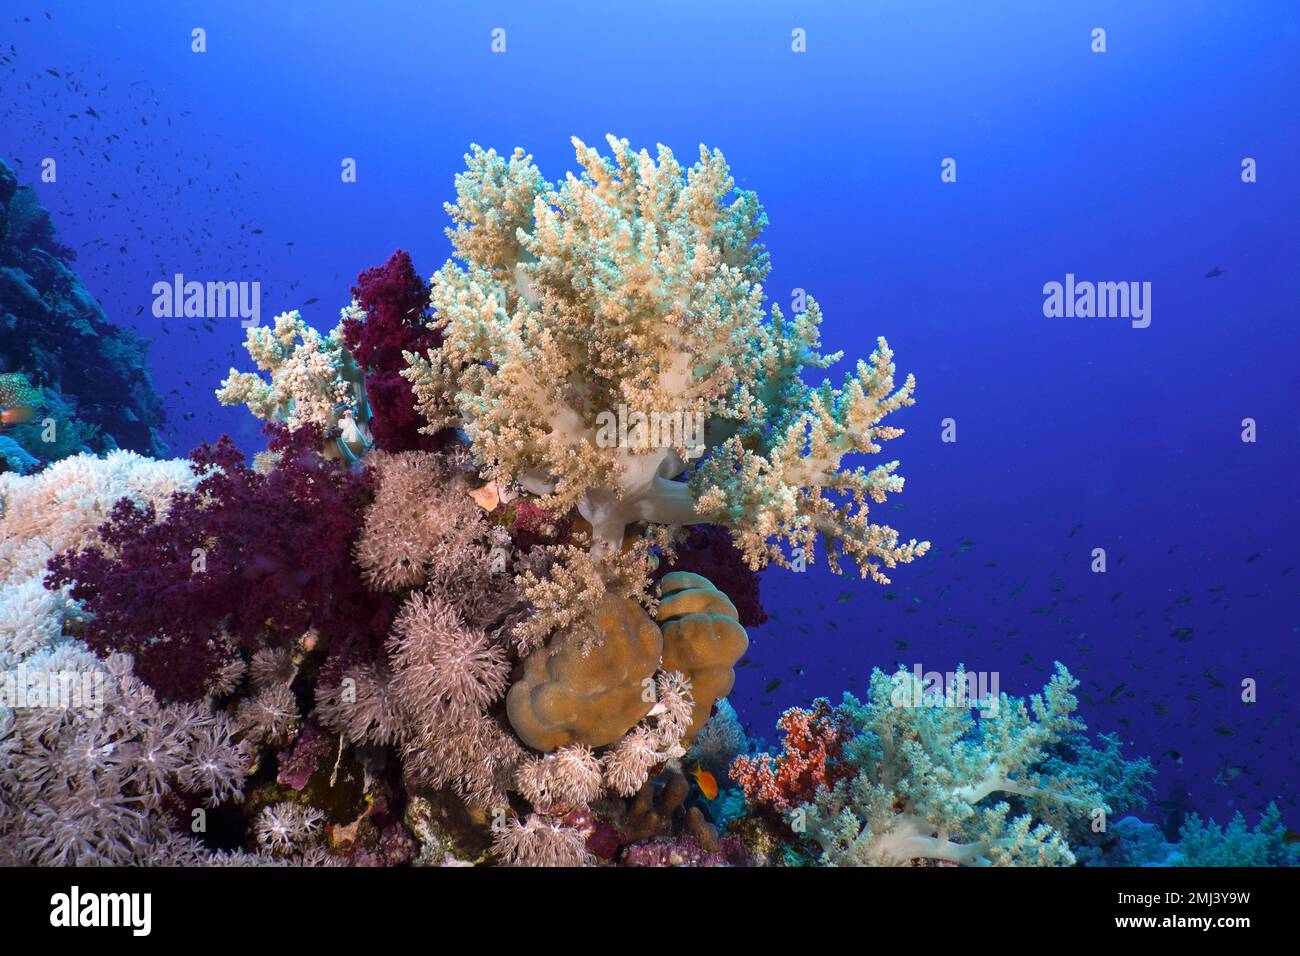 Broccoli tree (Litophyton arboreum), Elphinstone Reef dive site, Egypt, Red Sea Stock Photo